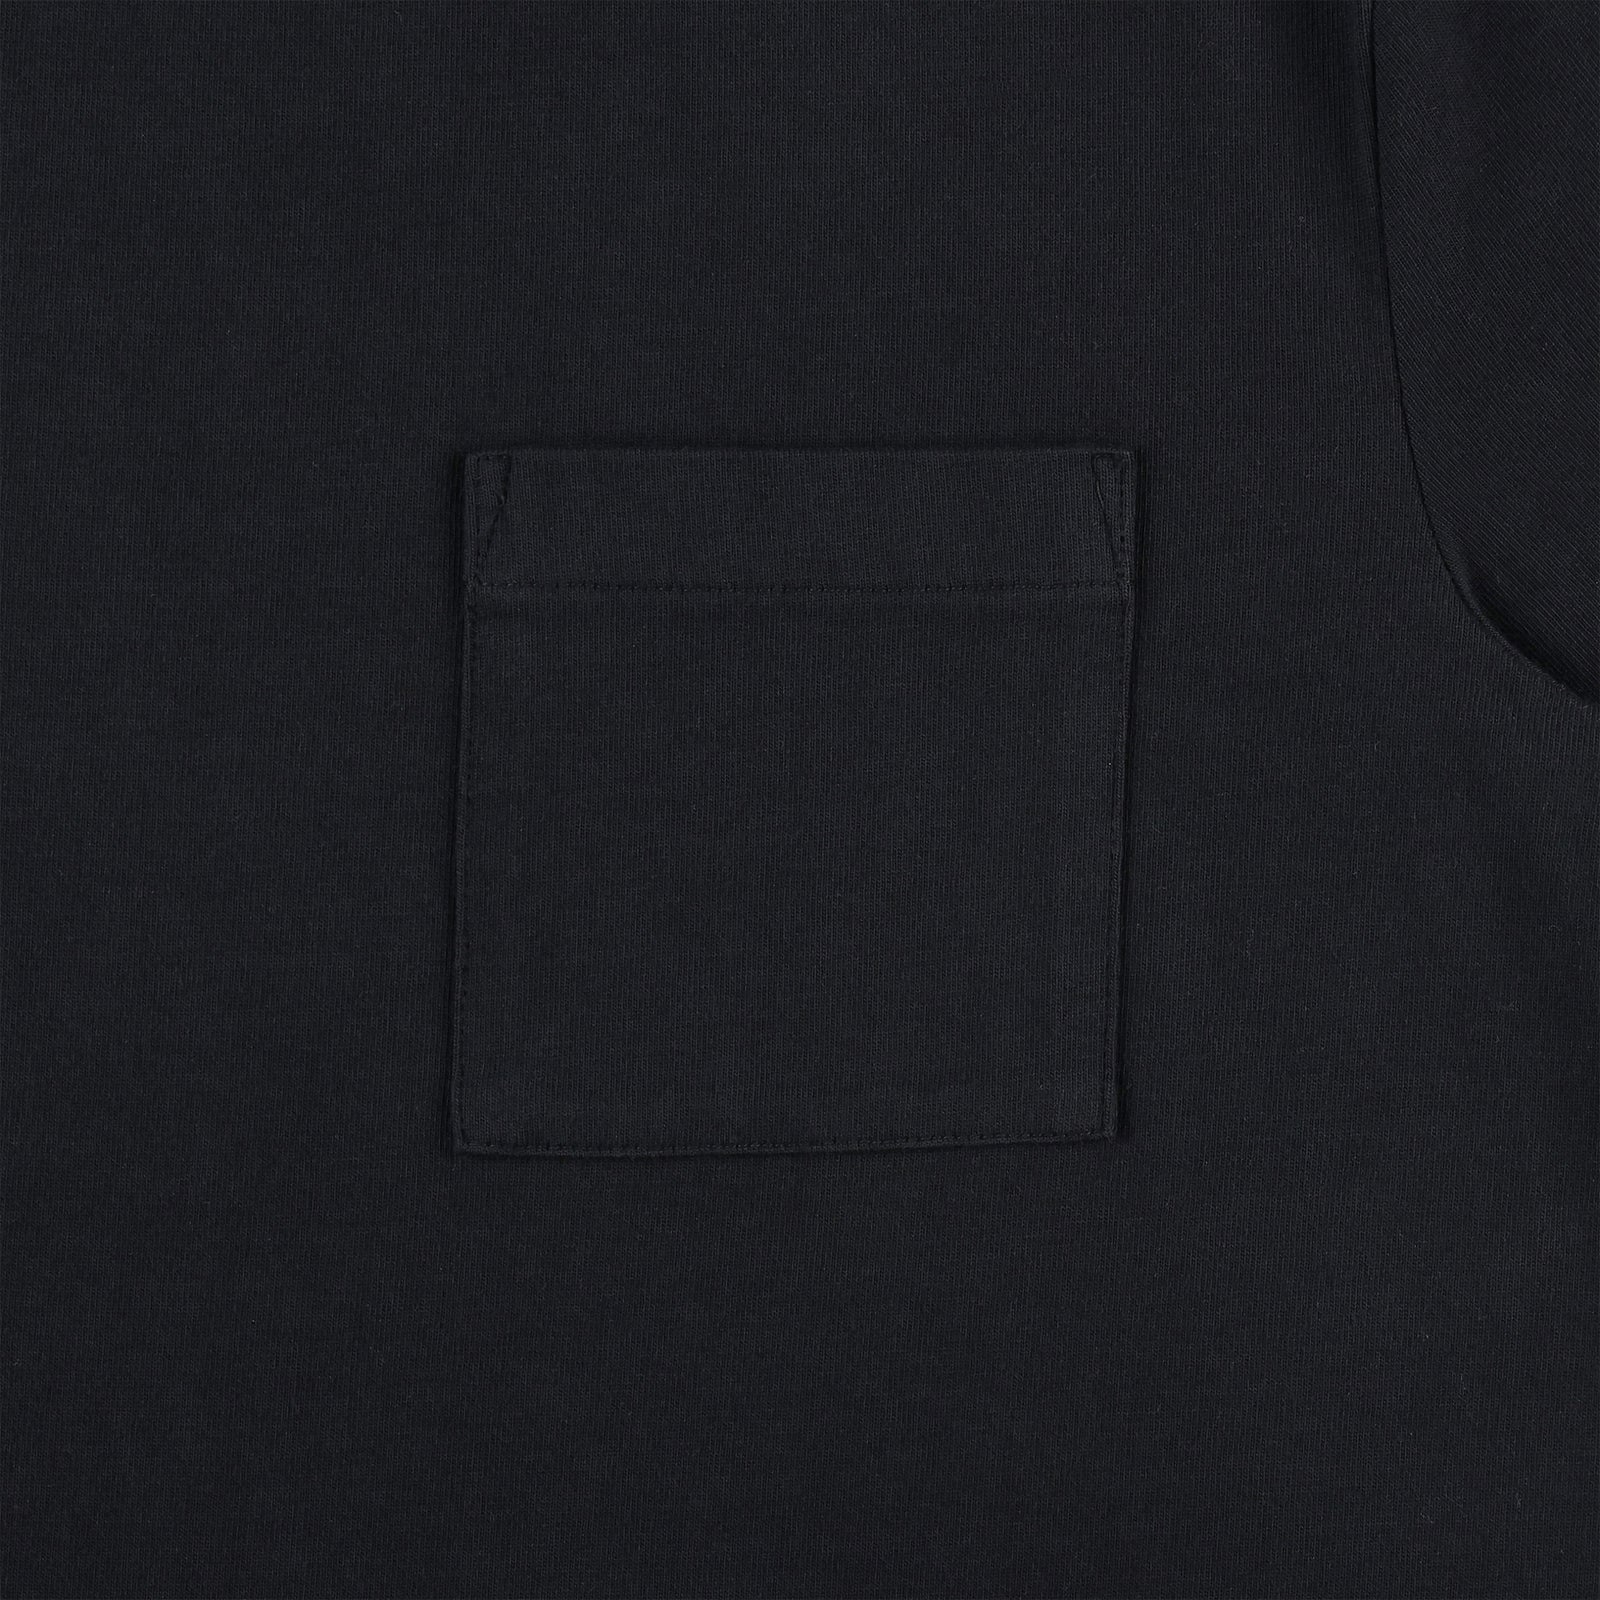 General detail shot of chest pocket on Topo Designs Men's Dirt Pocket Tee 100% organic cotton short sleeve t-shirt in "black"